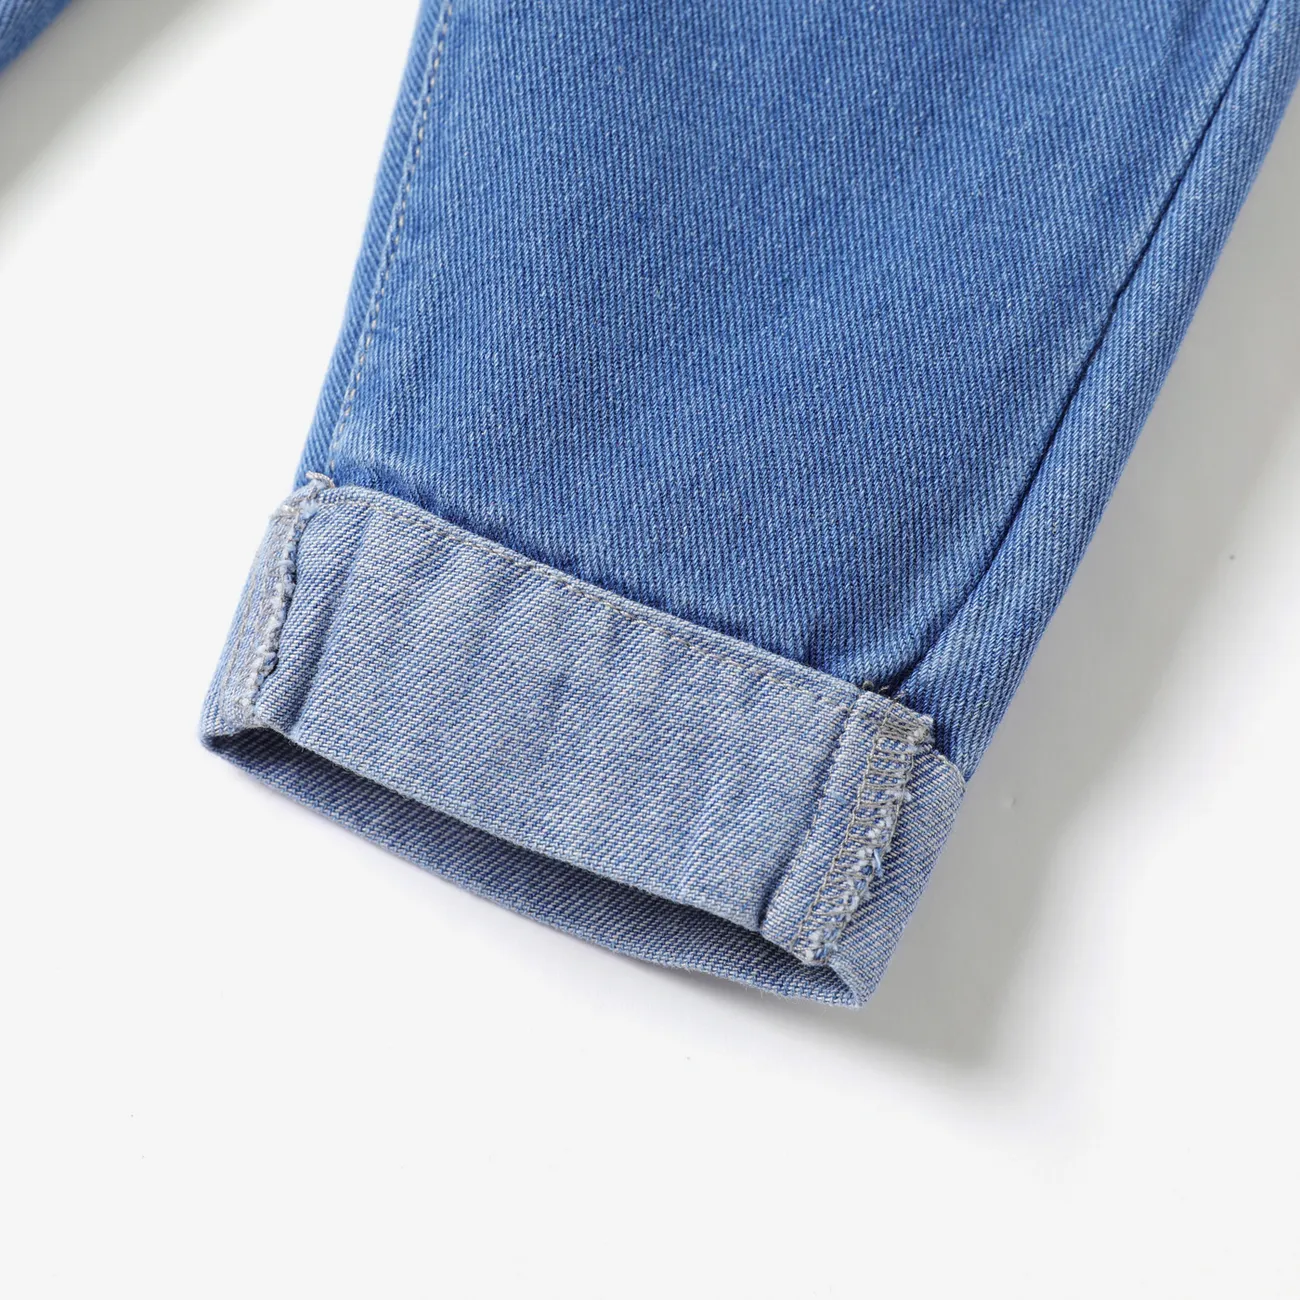 Baby Boy/Girl Belted Roll Up Hem Ripped Denim Jeans Blue big image 1